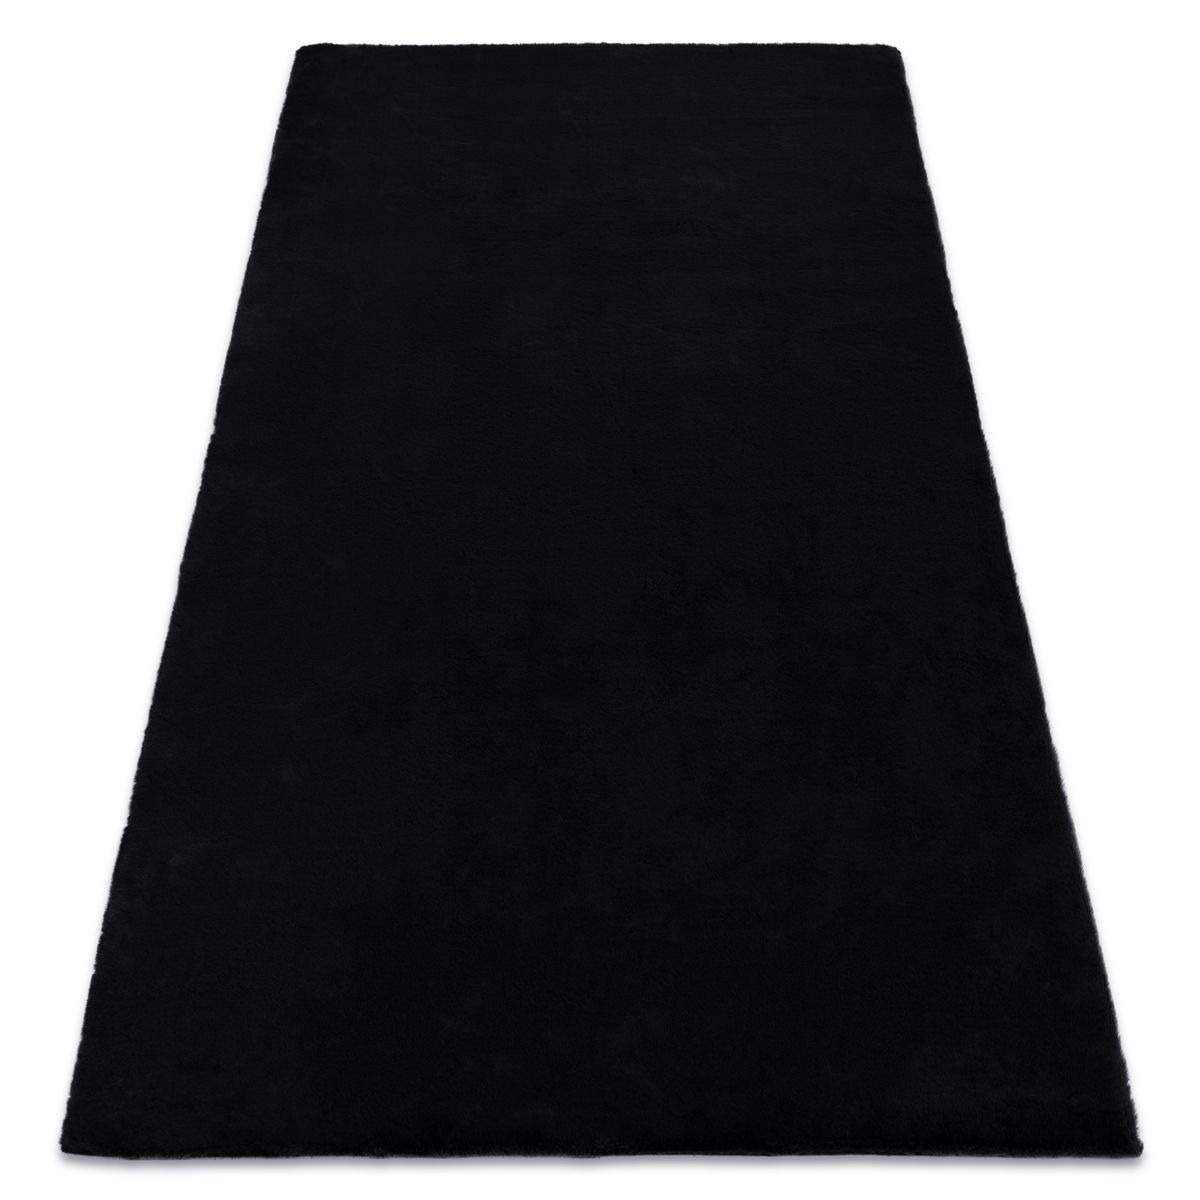 Taol Single Coloured Rug Black, 160x220 cm - image 1